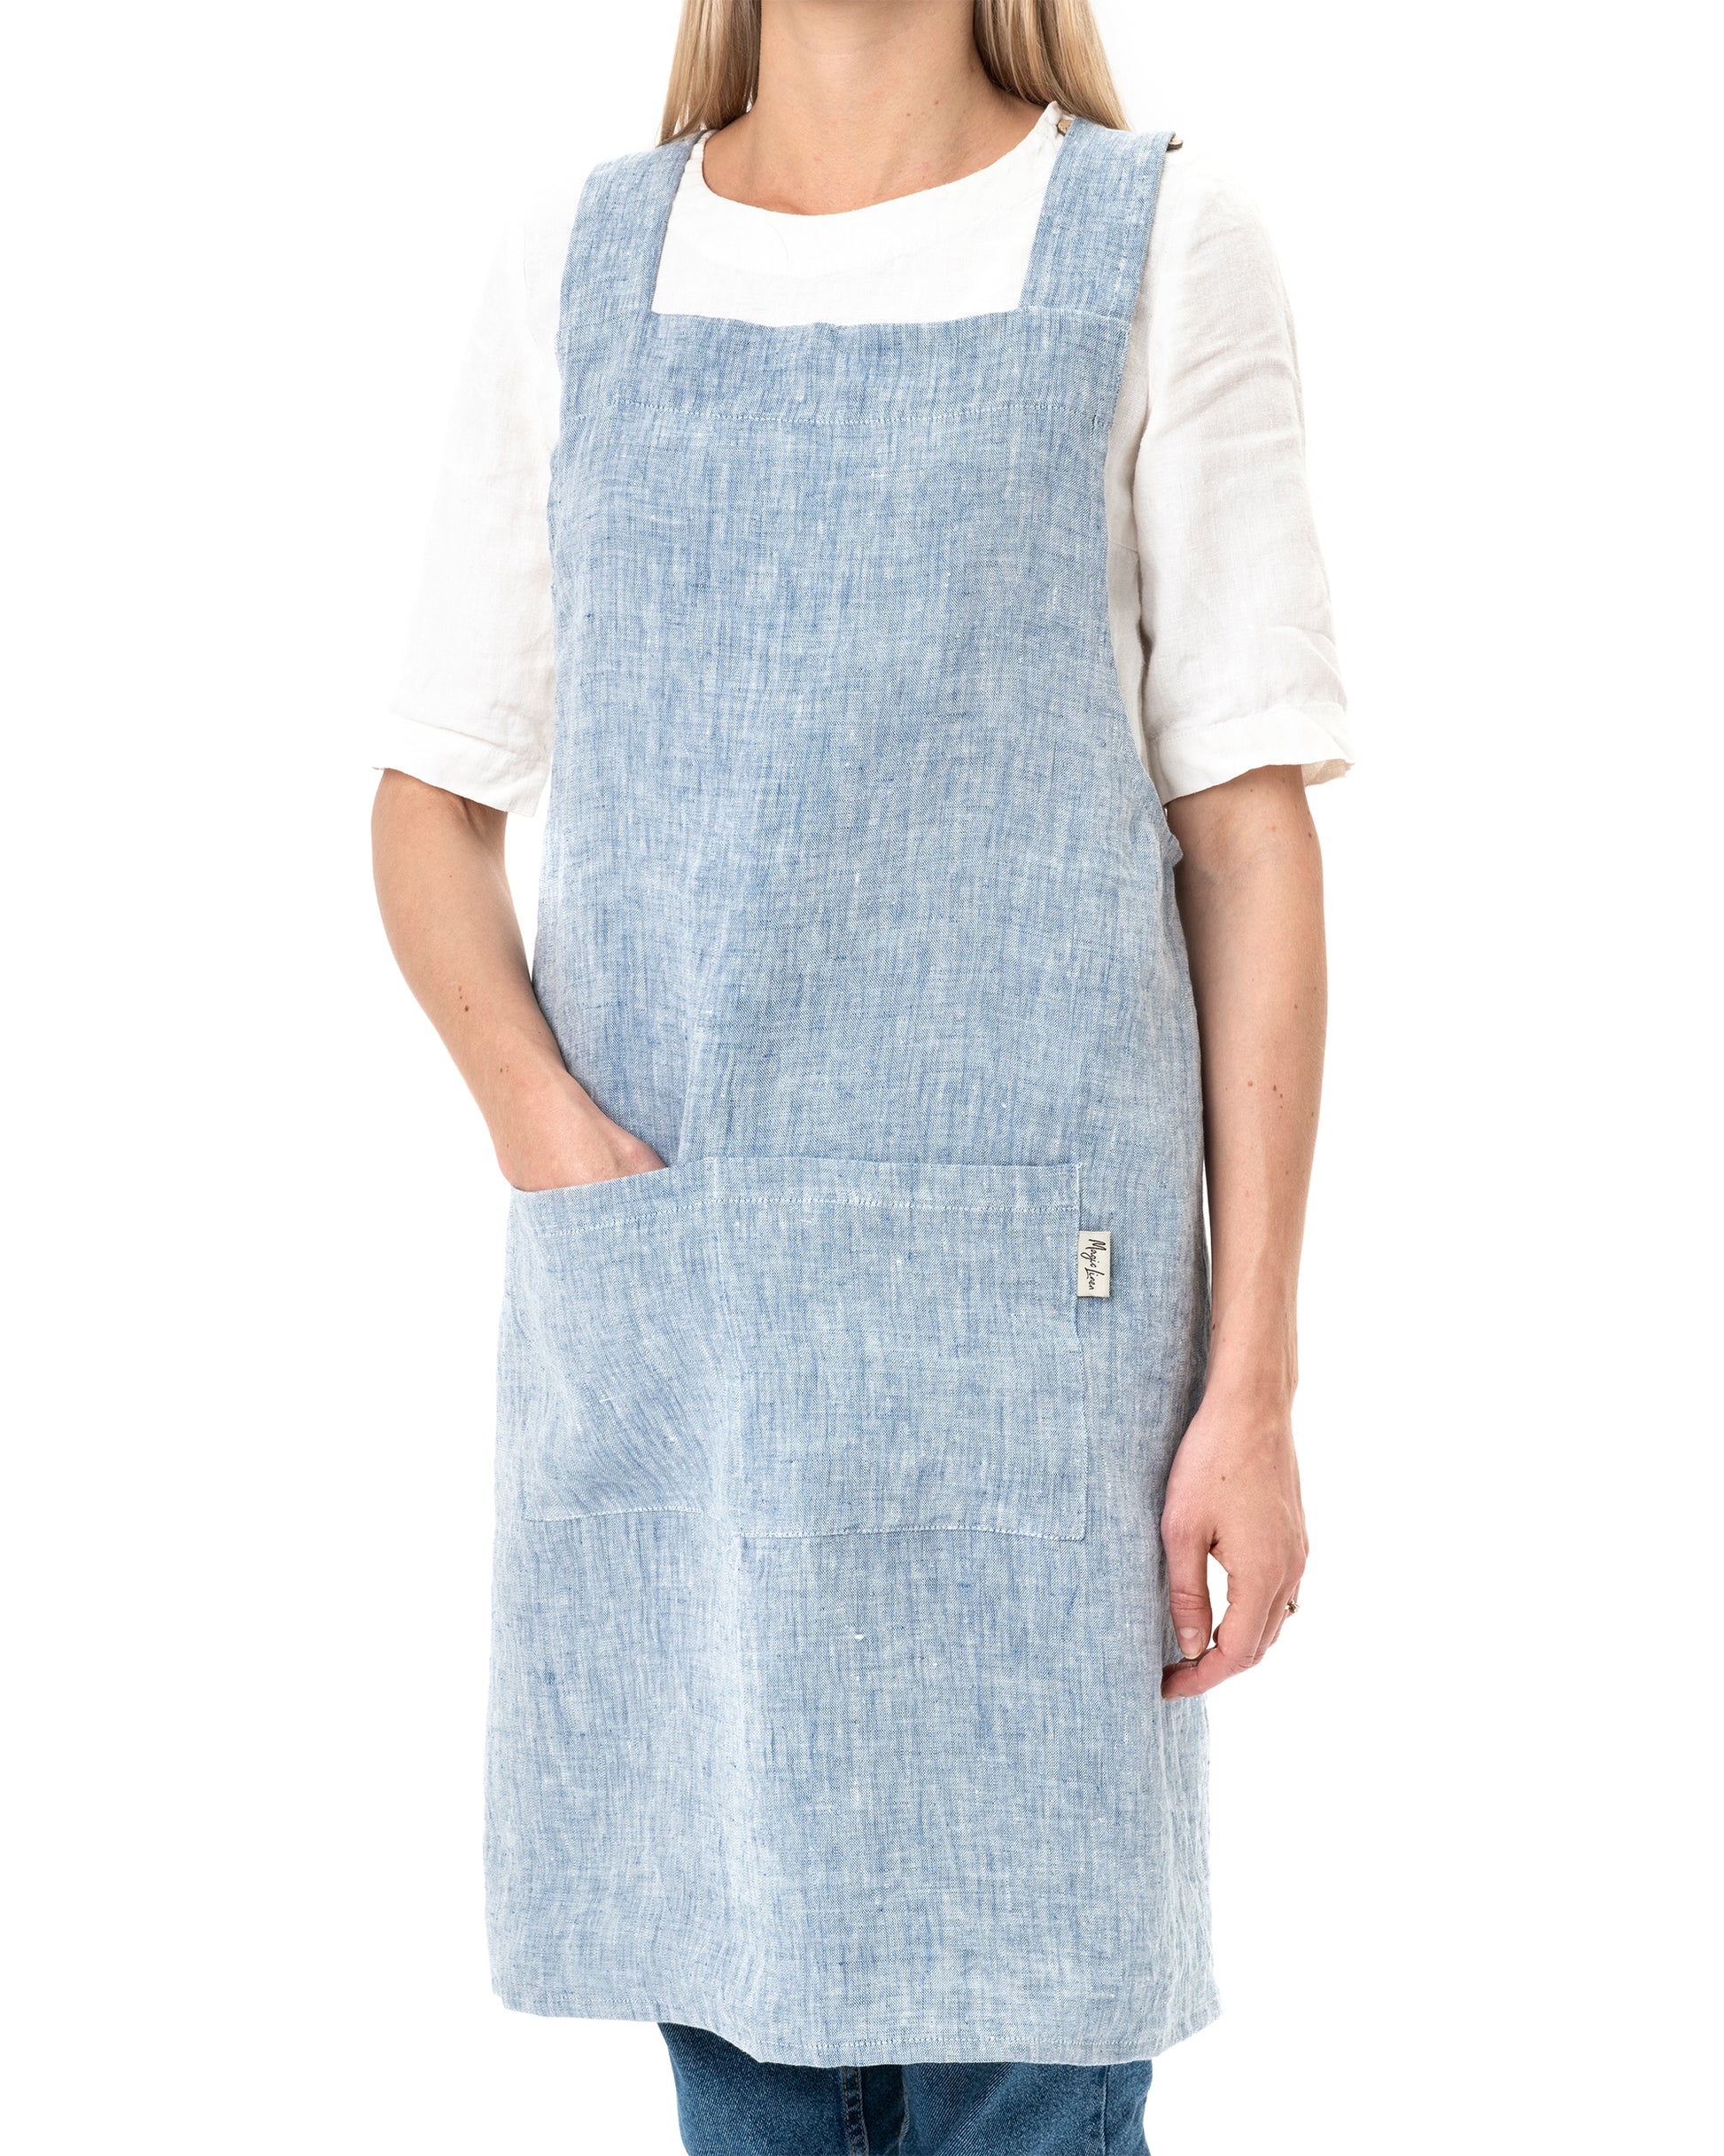 Pinafore cross-back linen apron in Blue melange - MagicLinen